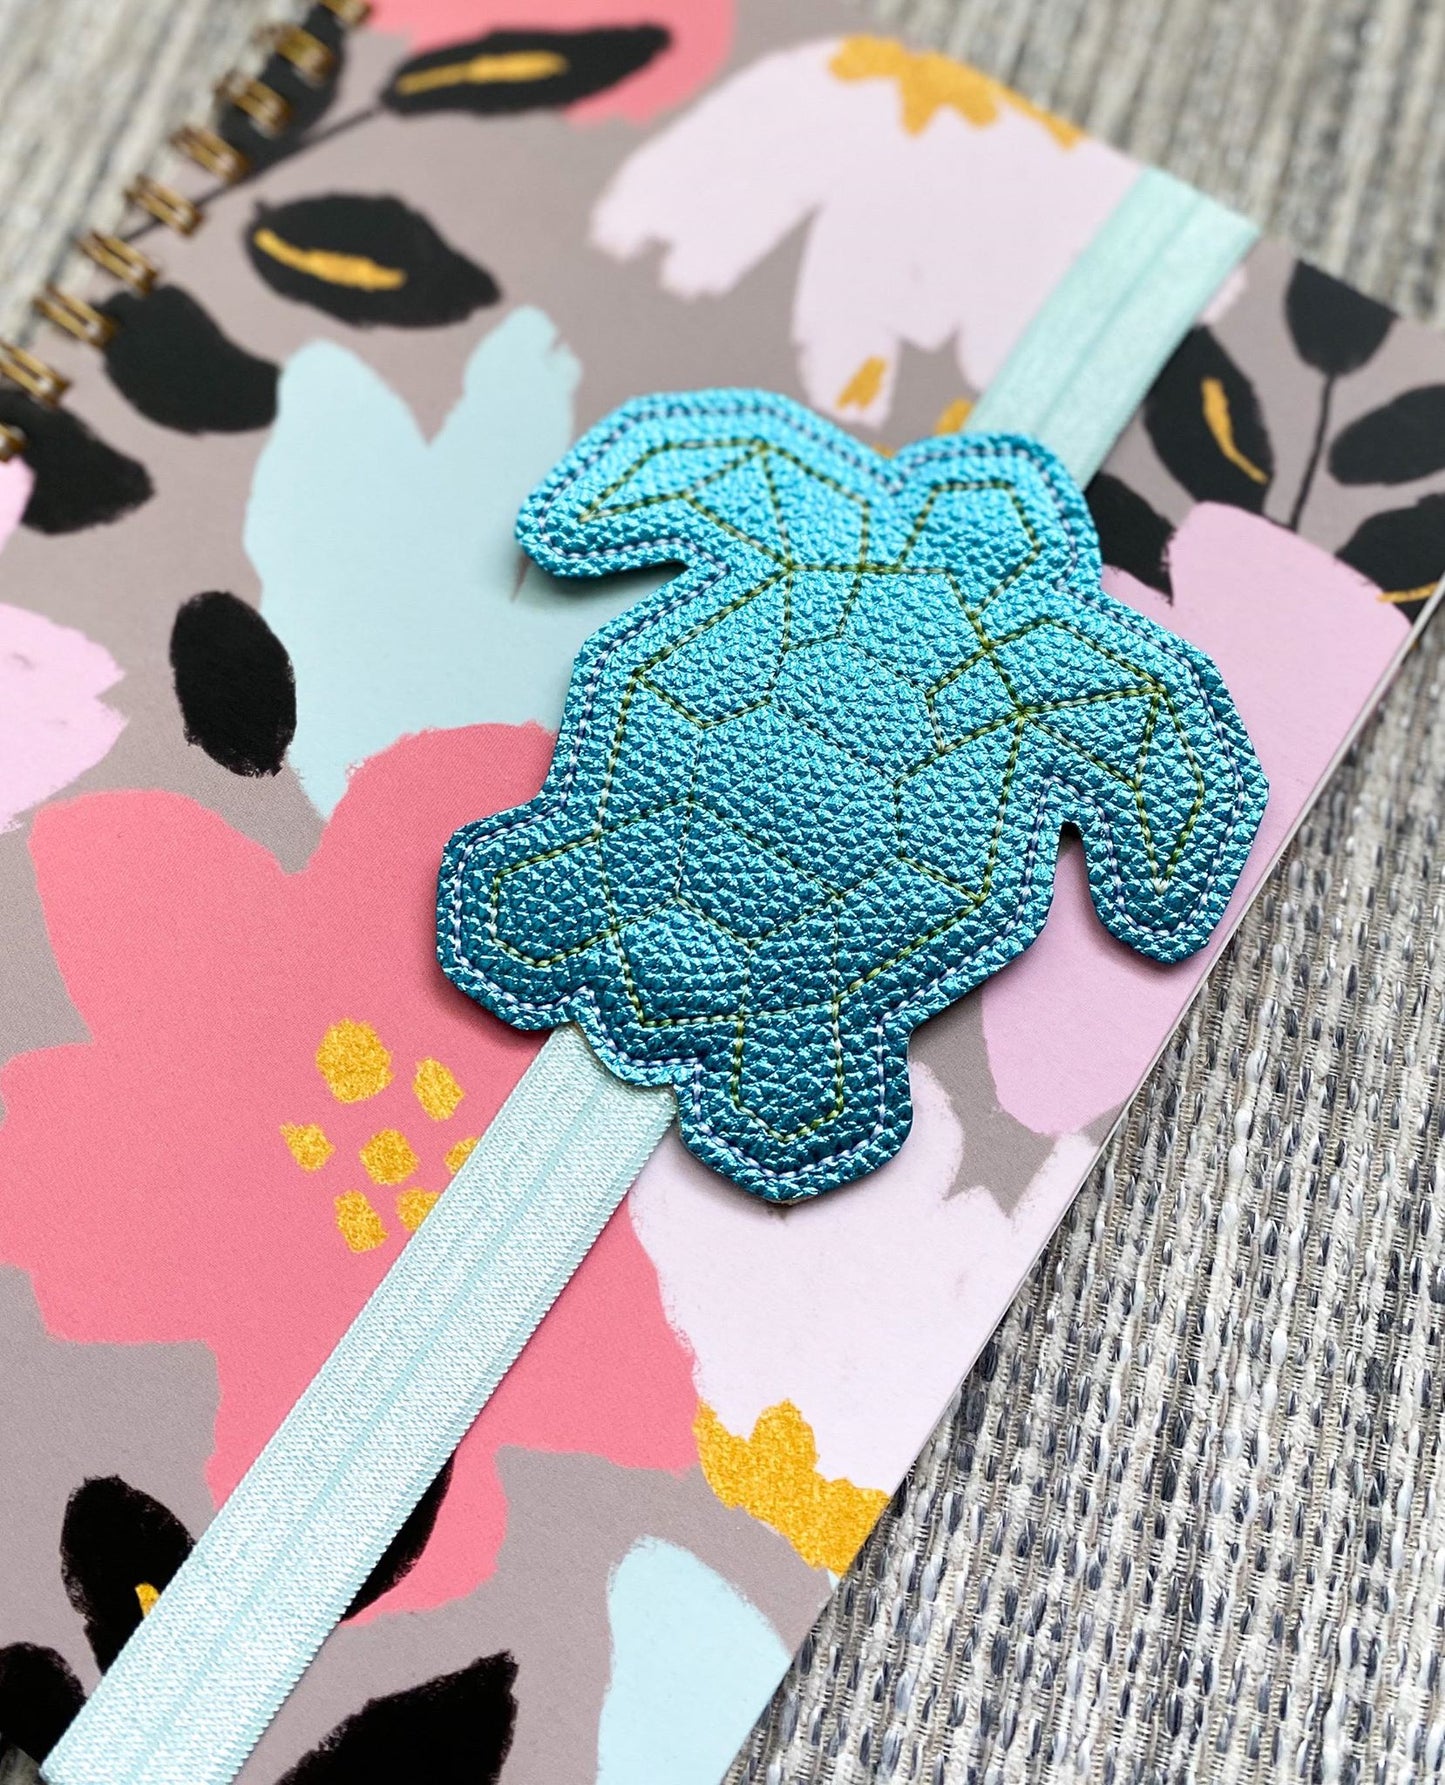 Geometric Turtle Book Band - Digital Embroidery Design